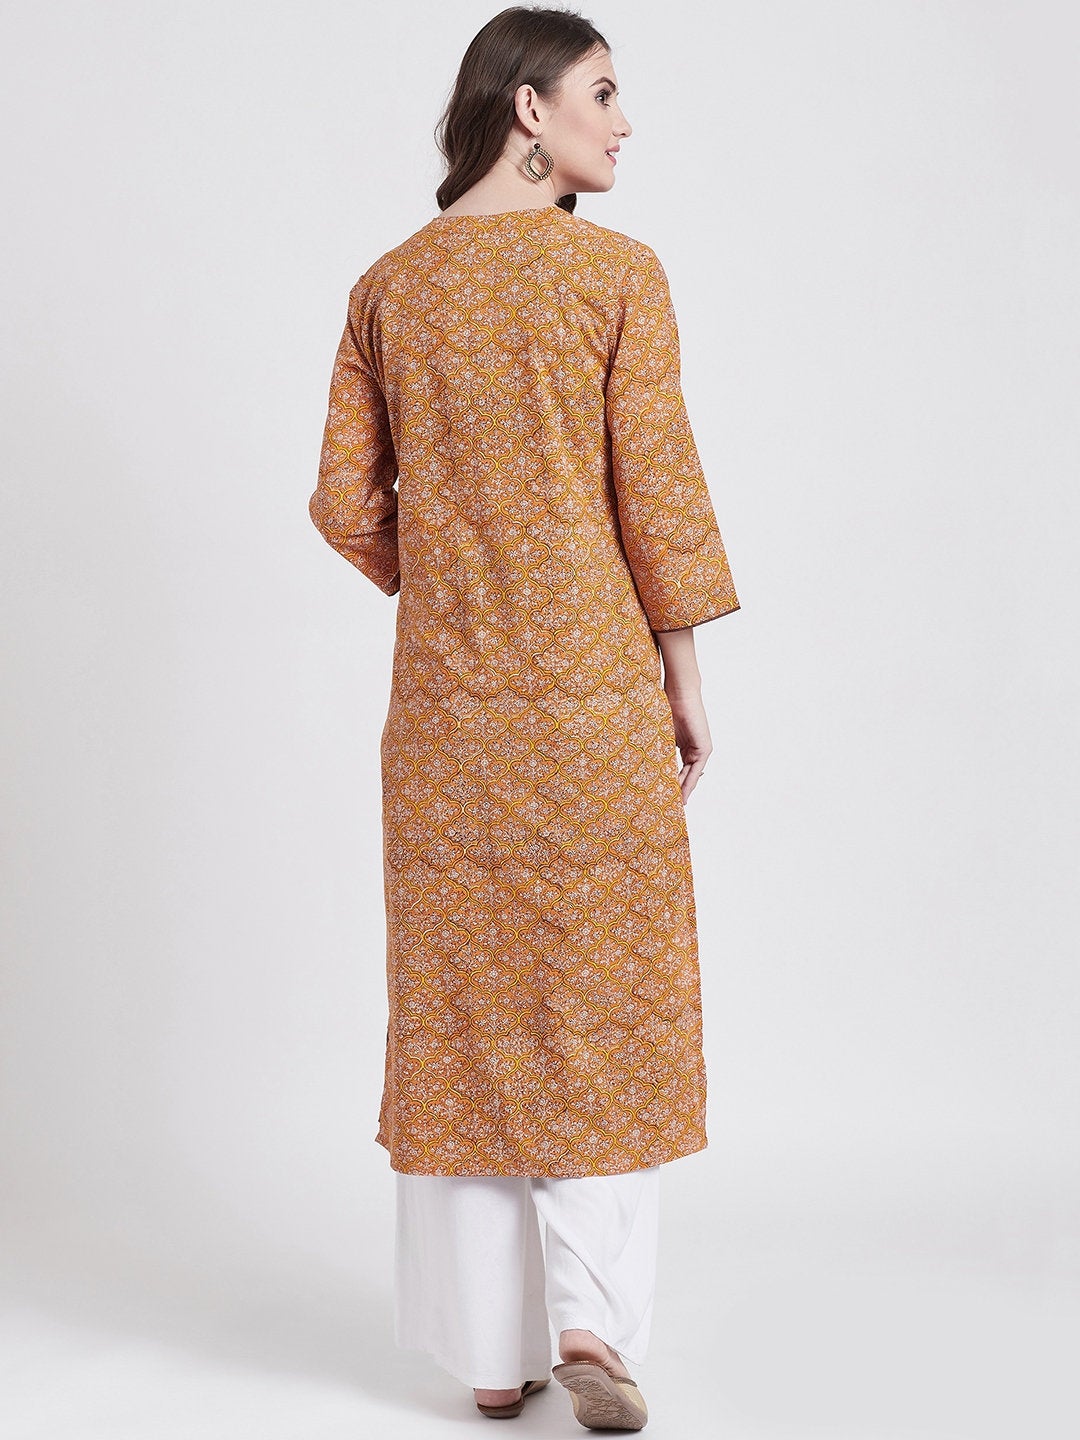 Hand block printed Indian ethnic long kurta in mustard colour